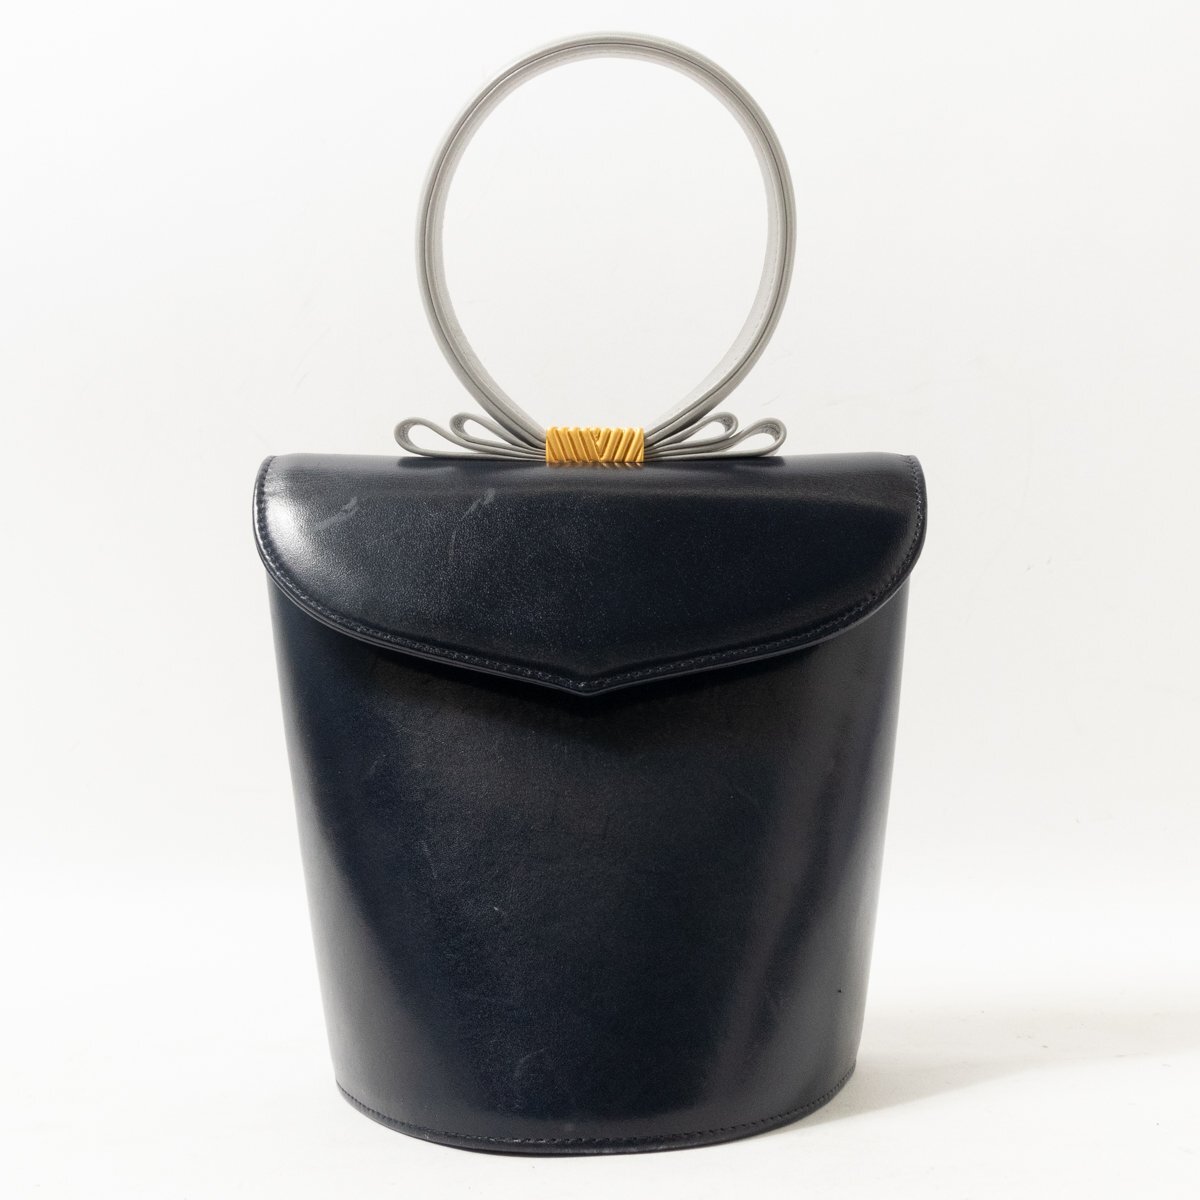 KIMIJIMA Kimi jima ручная сумочка вечерняя сумочка в наличии сумка натуральная кожа темно-синий темно-синий серия Gold металлические принадлежности чистый . elegance церемония женщина 